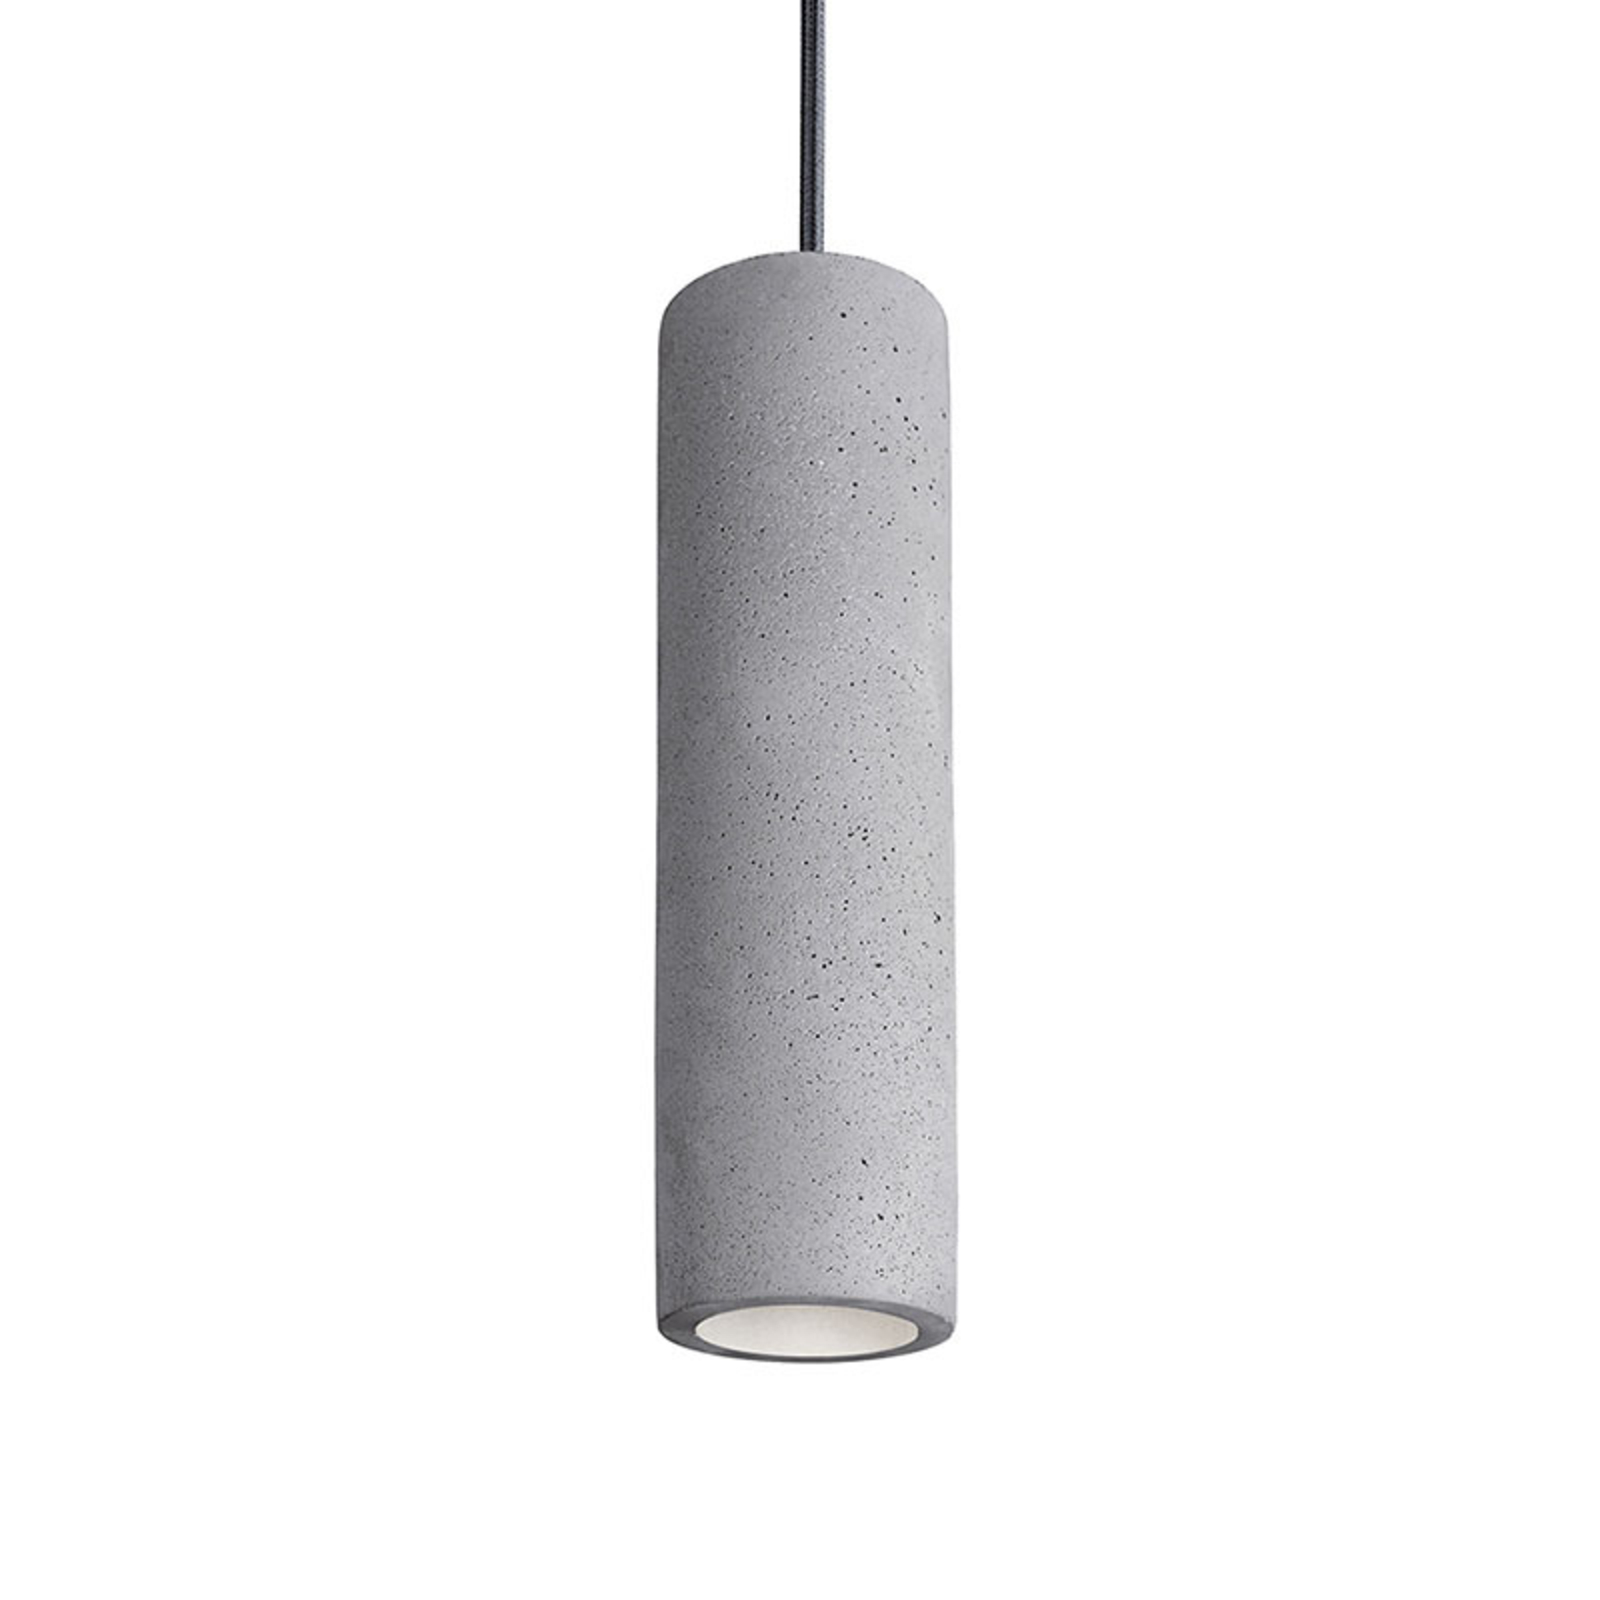 Hanglamp Phenix van beton, langwerpig